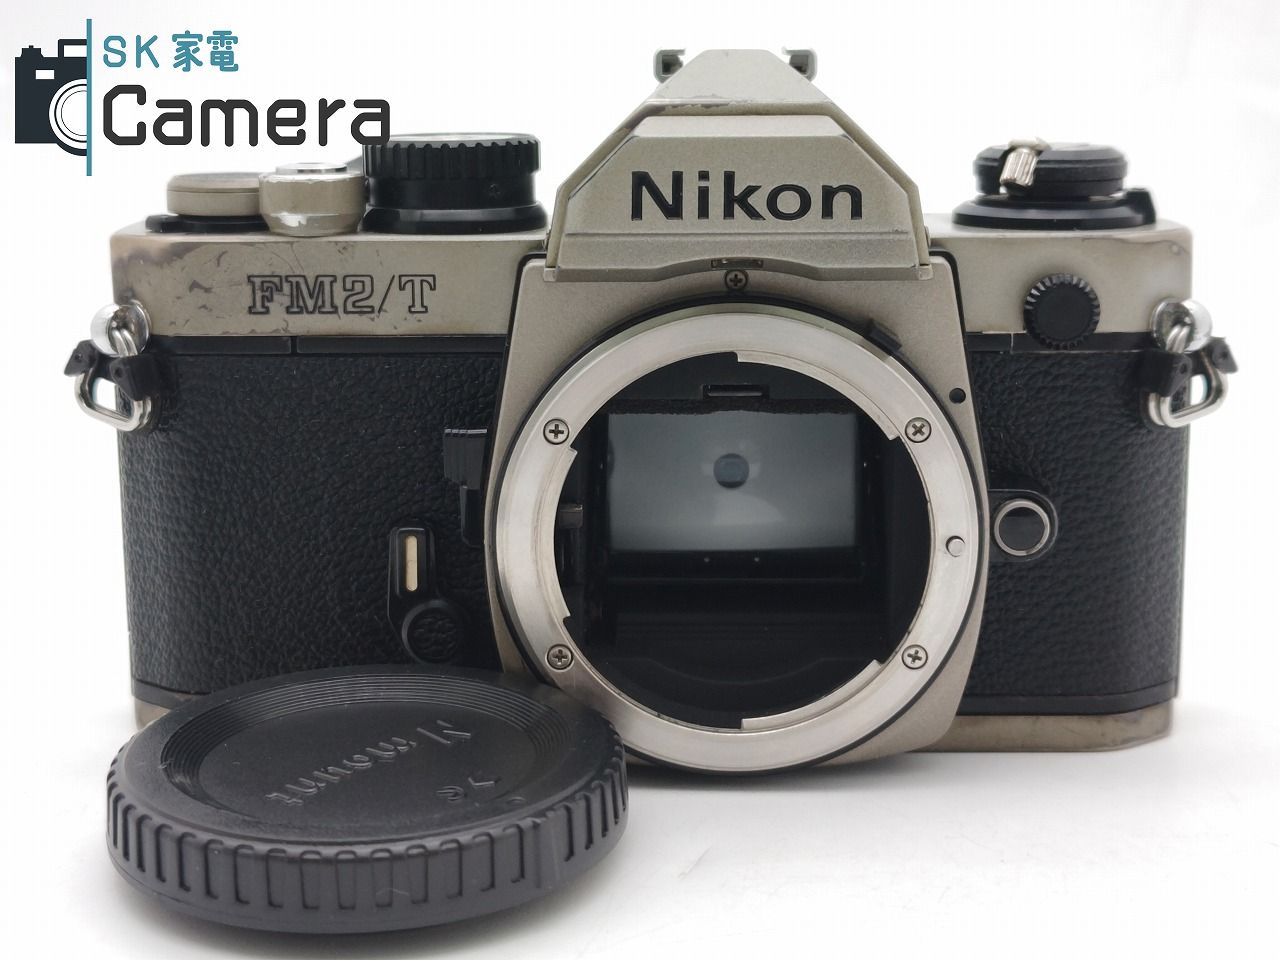 Nikon FM2/T ニコン チタン 一眼レフカメラ - メルカリ